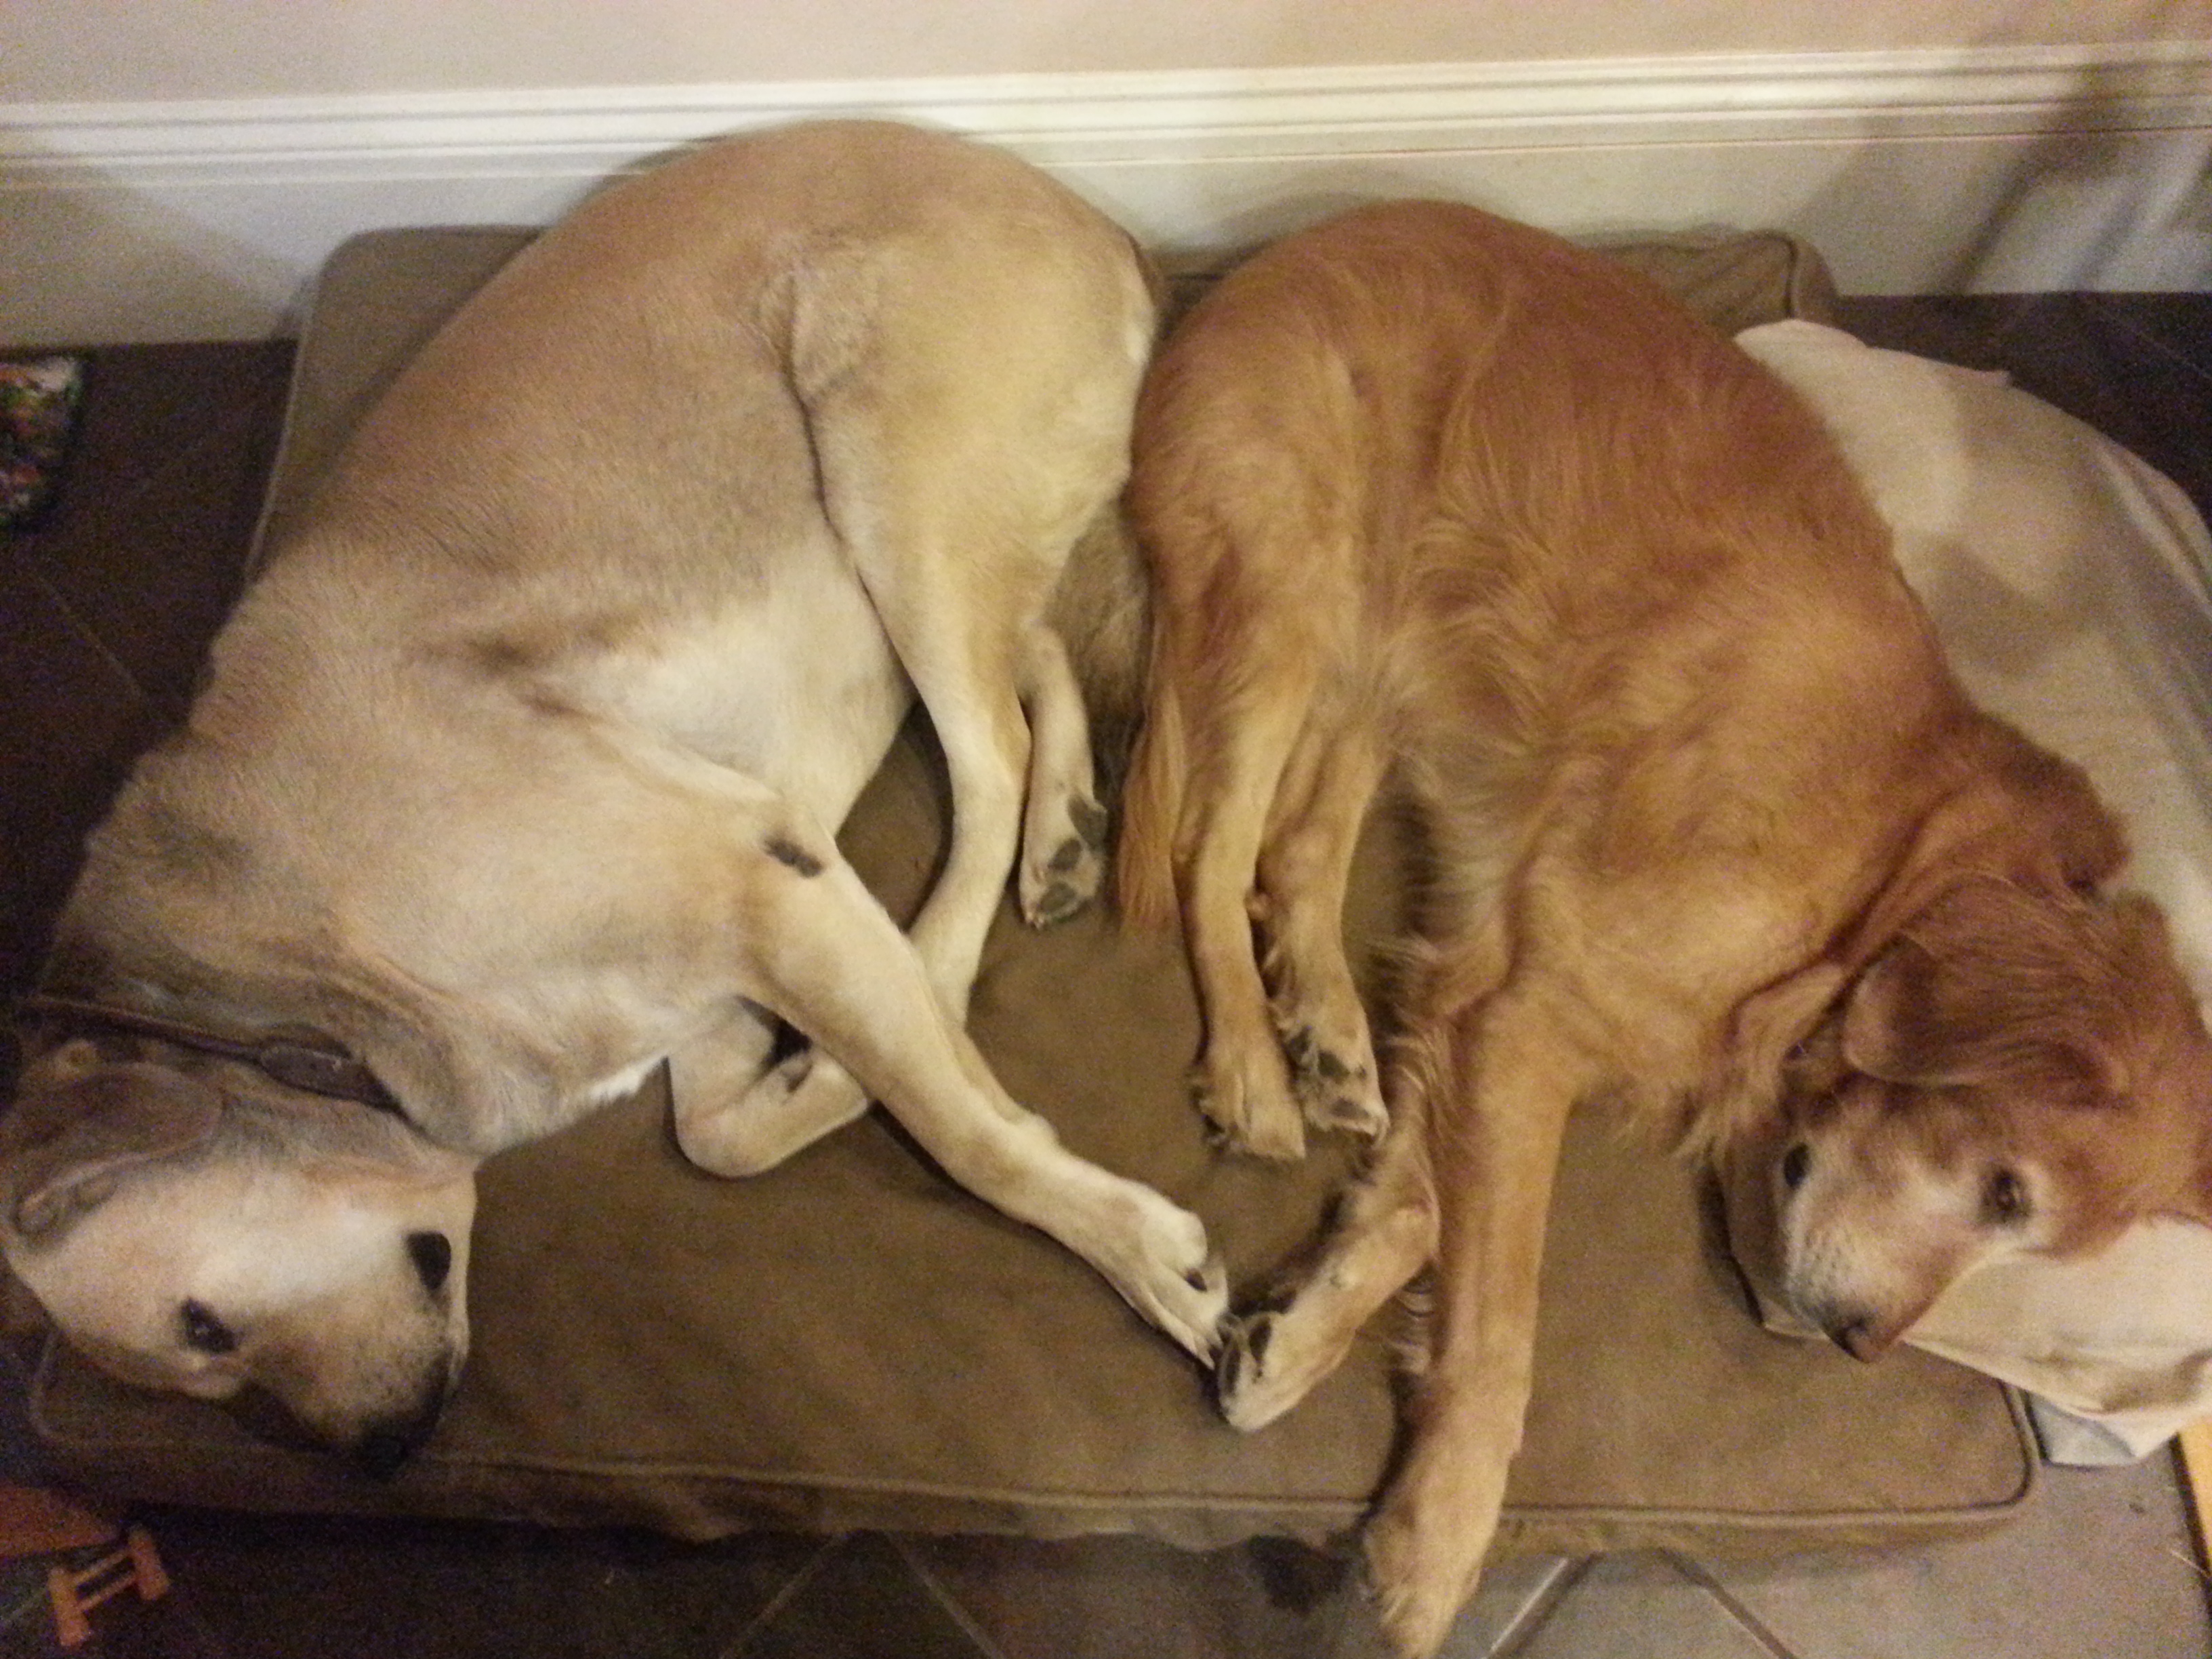 Sherman and Stella, same dog bed